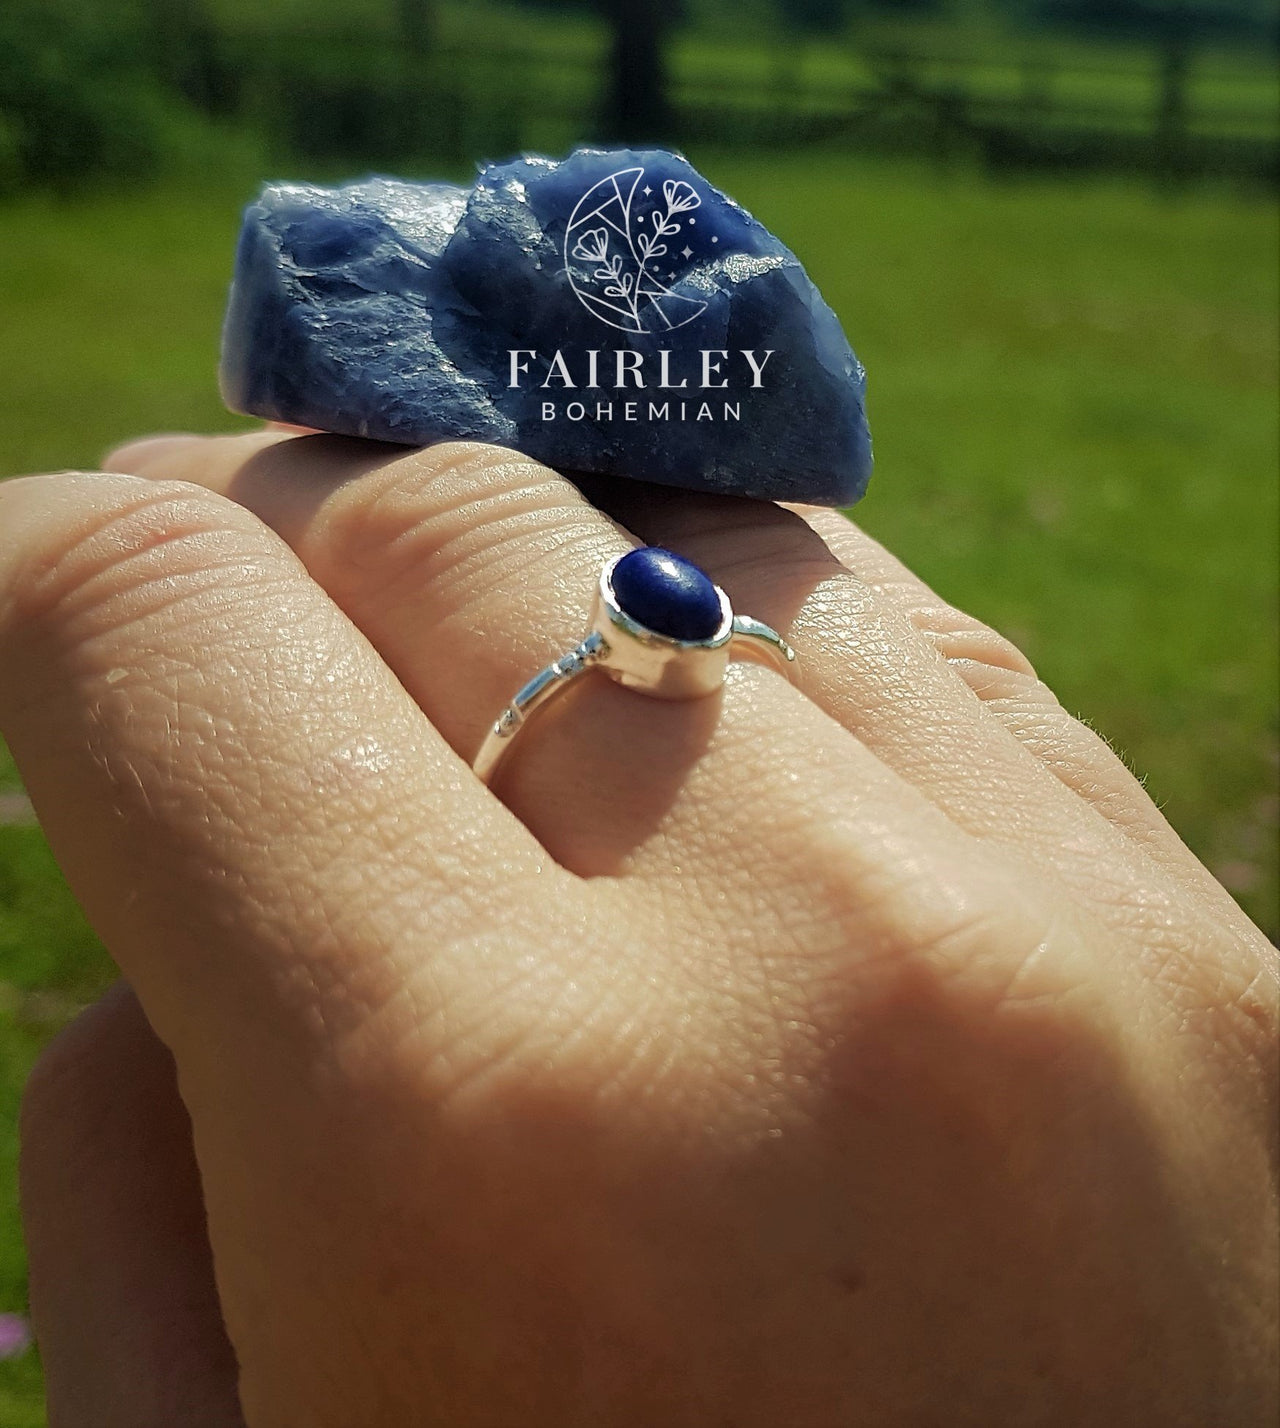 Lapis Lazuli September Birthstone Adjustable Sterling Silver Ring